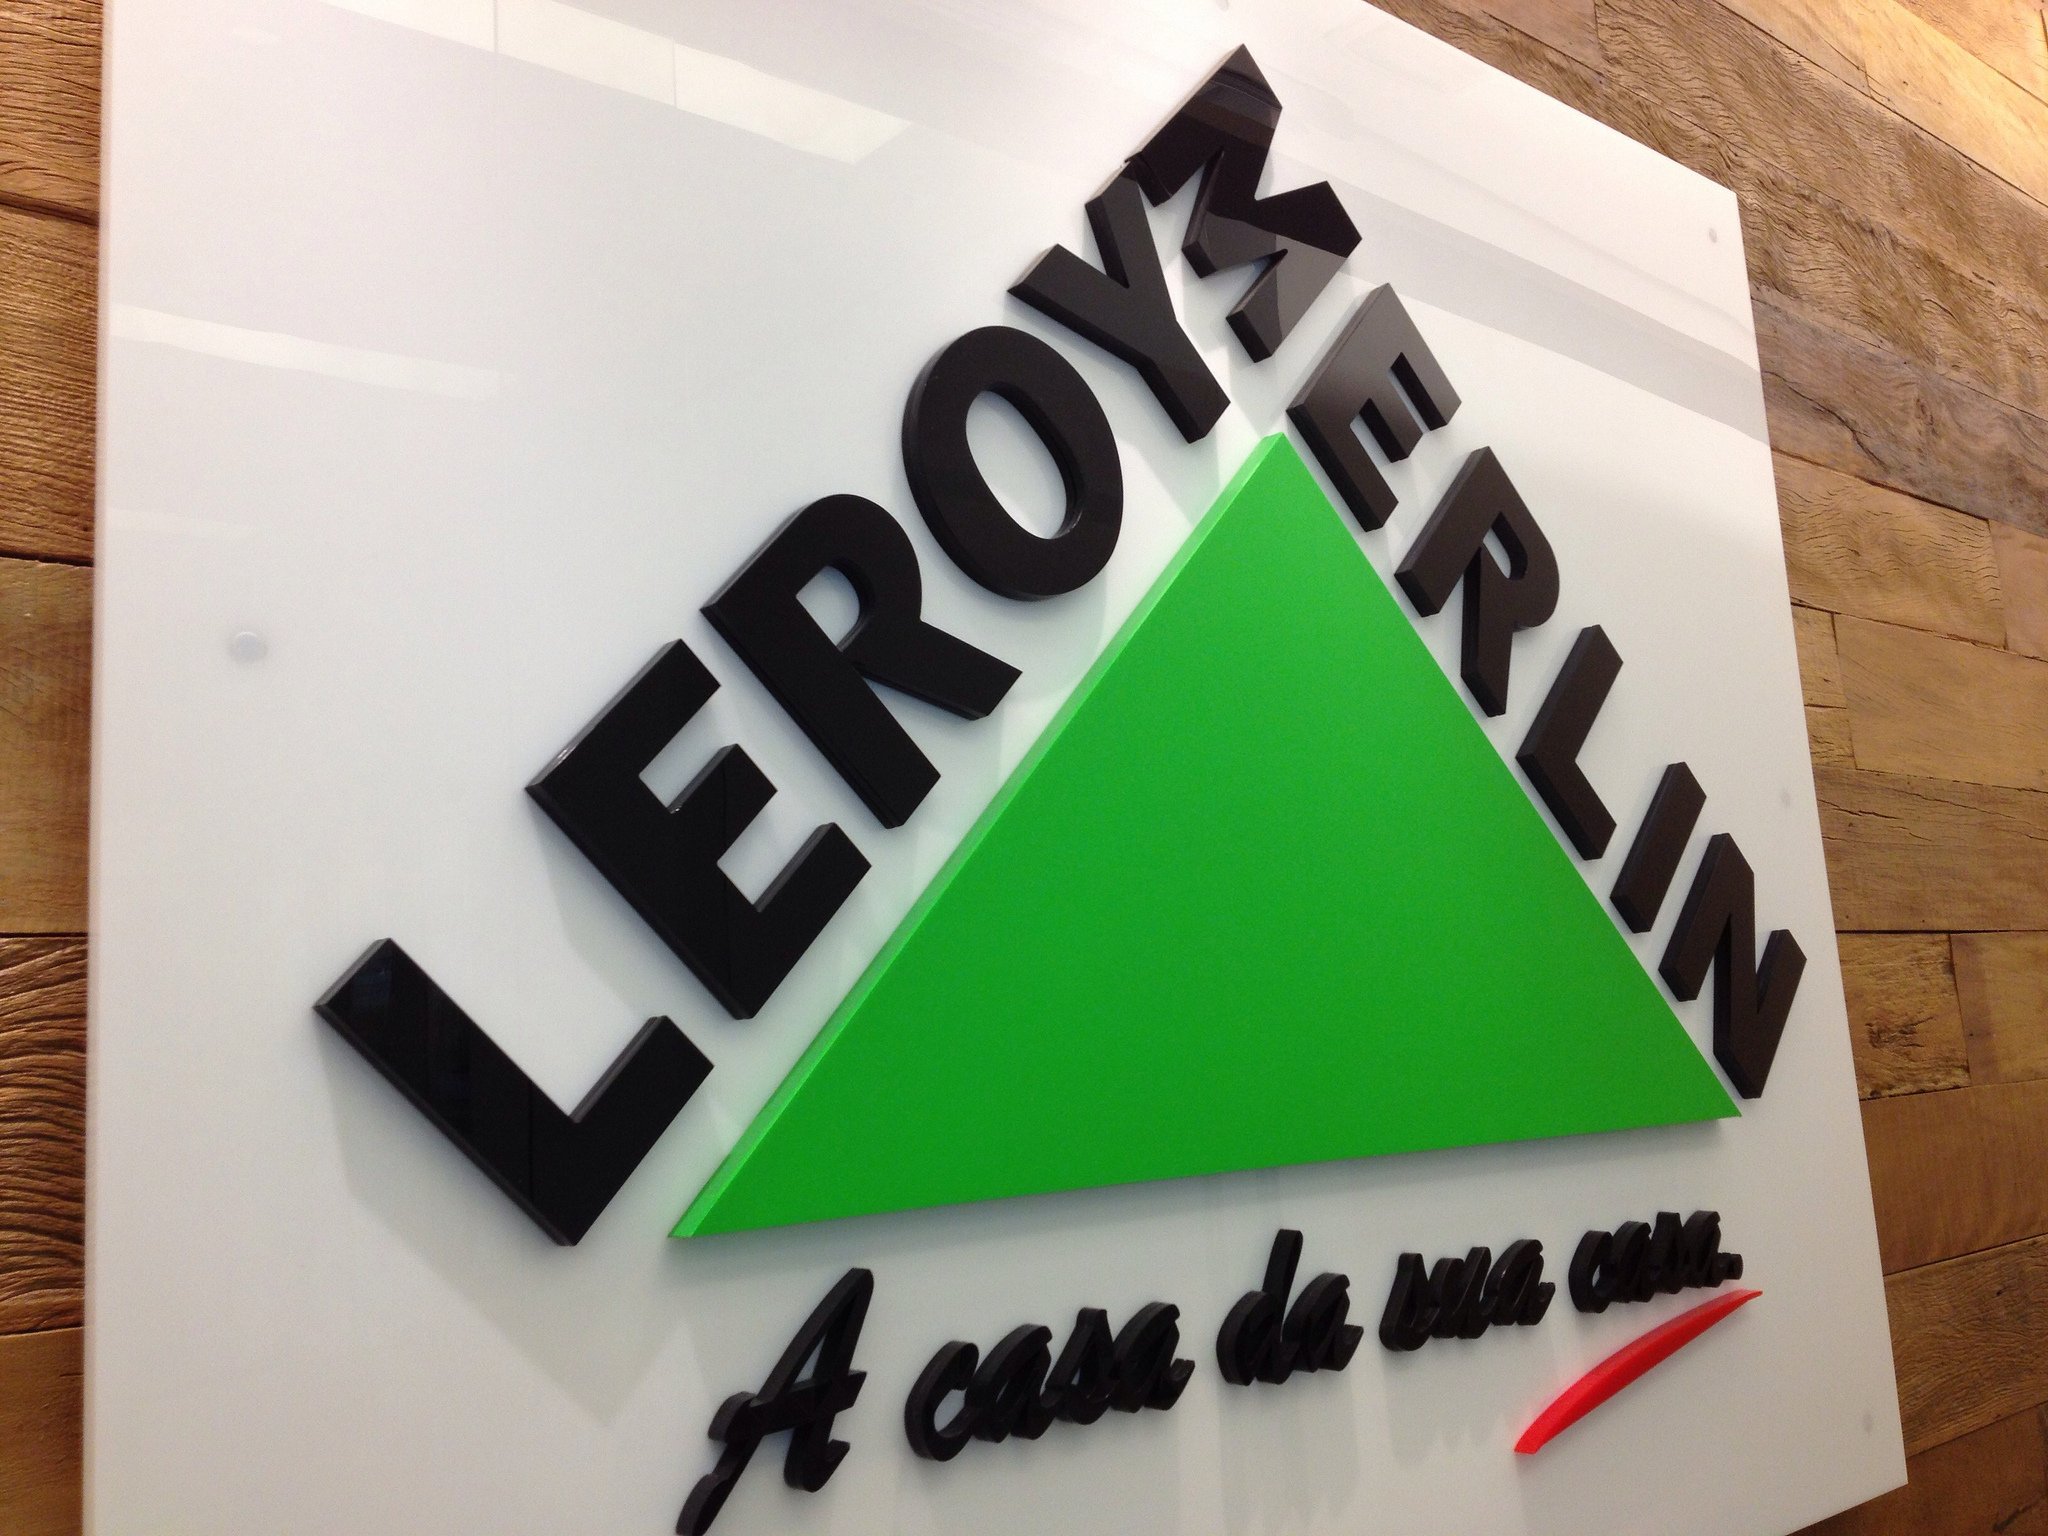 Leroy Merlin inverteix 5 milions en un nou "concepte" de botiga a Barcelona